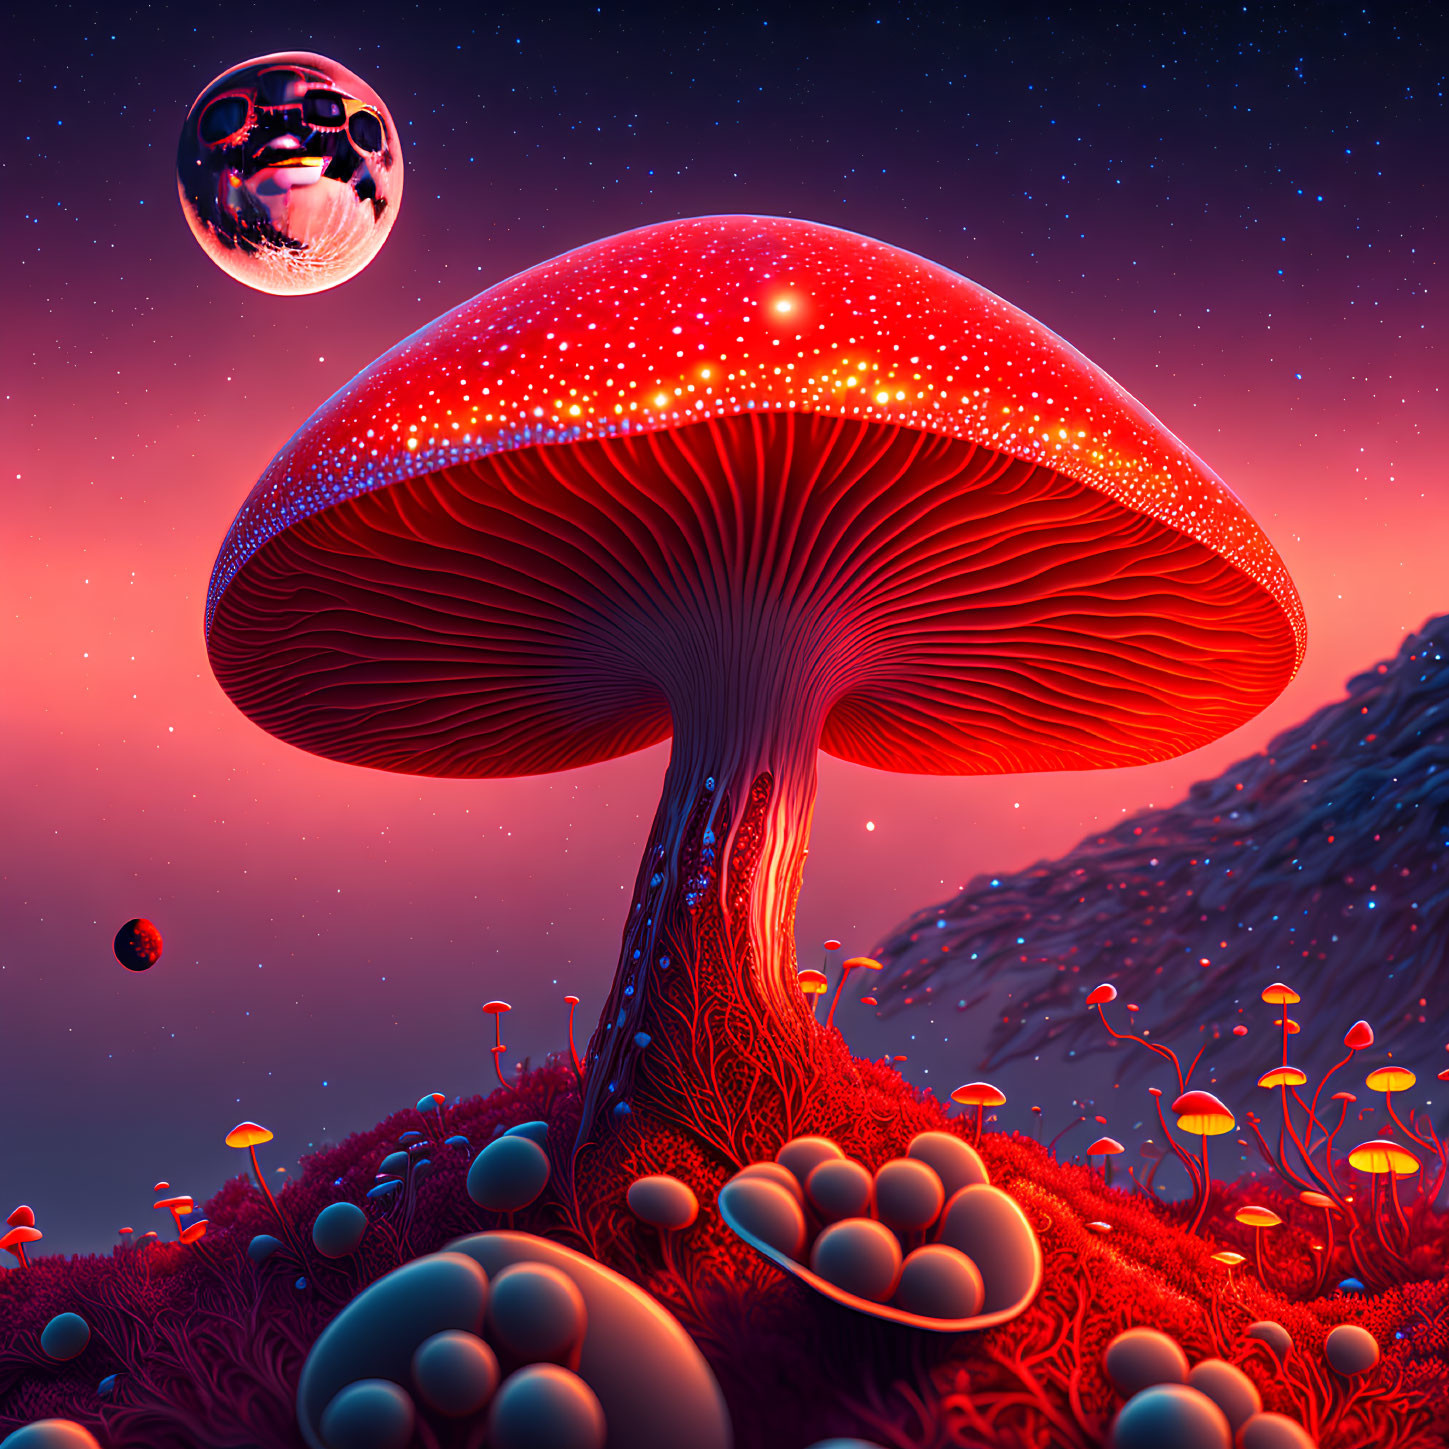 Fantasy landscape with glowing mushroom under starry sky